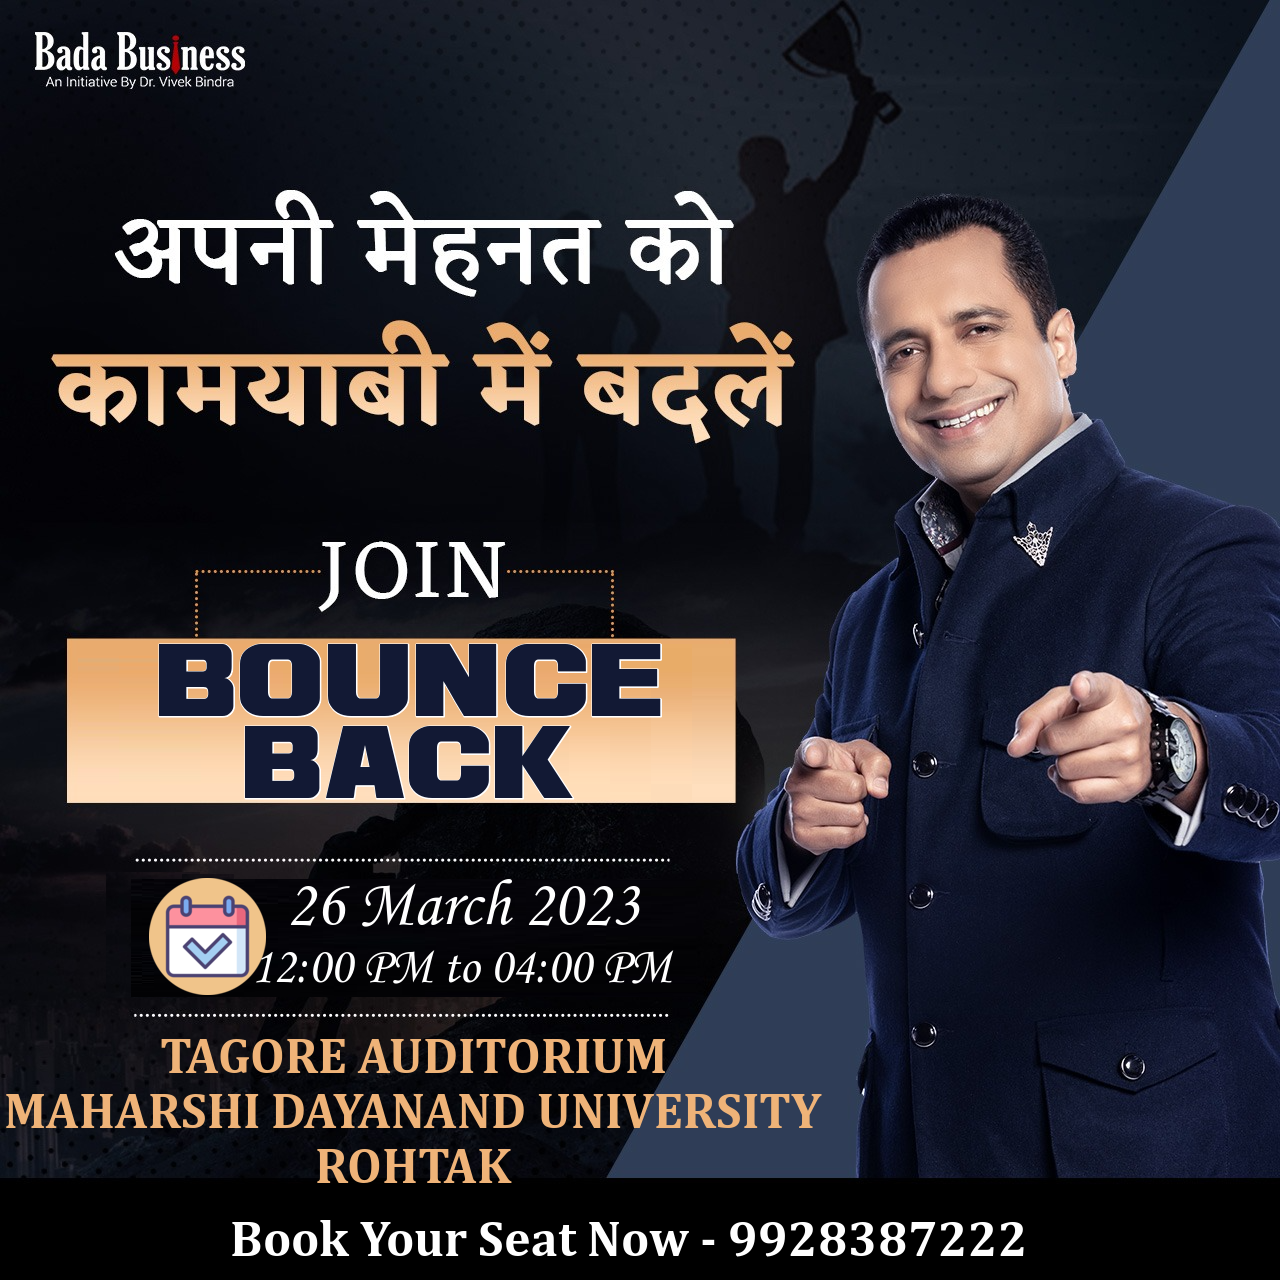 Dr. Vivek Bindra Bounce Back Event Rohtak, Haryana